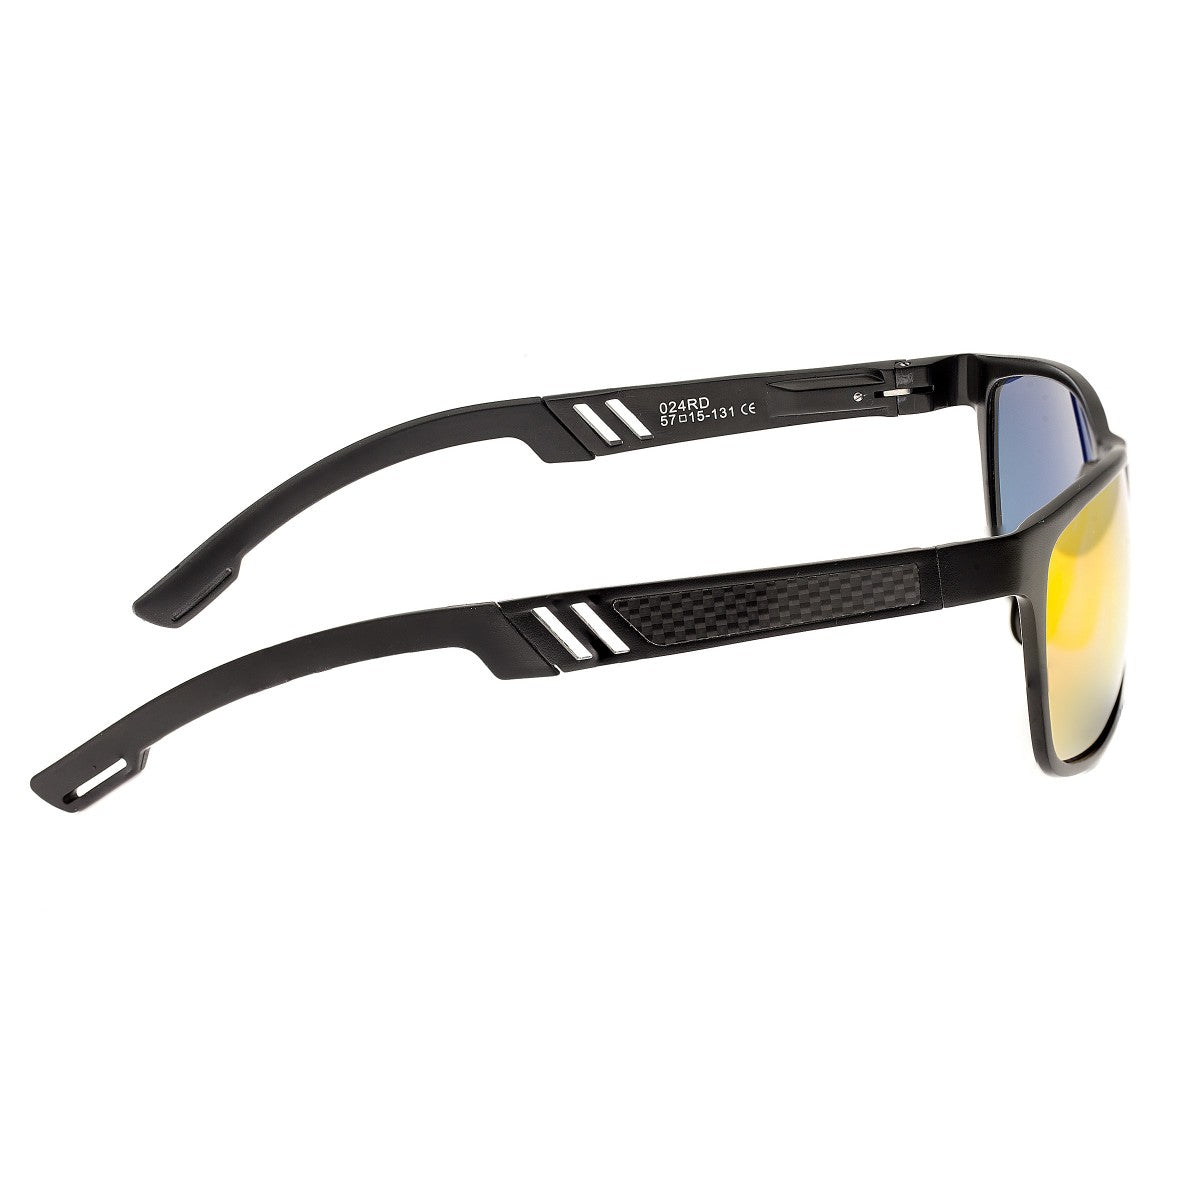 Breed Pyxis Titanium Polarized Sunglasses - Black/Red-Yellow - BSG024RD